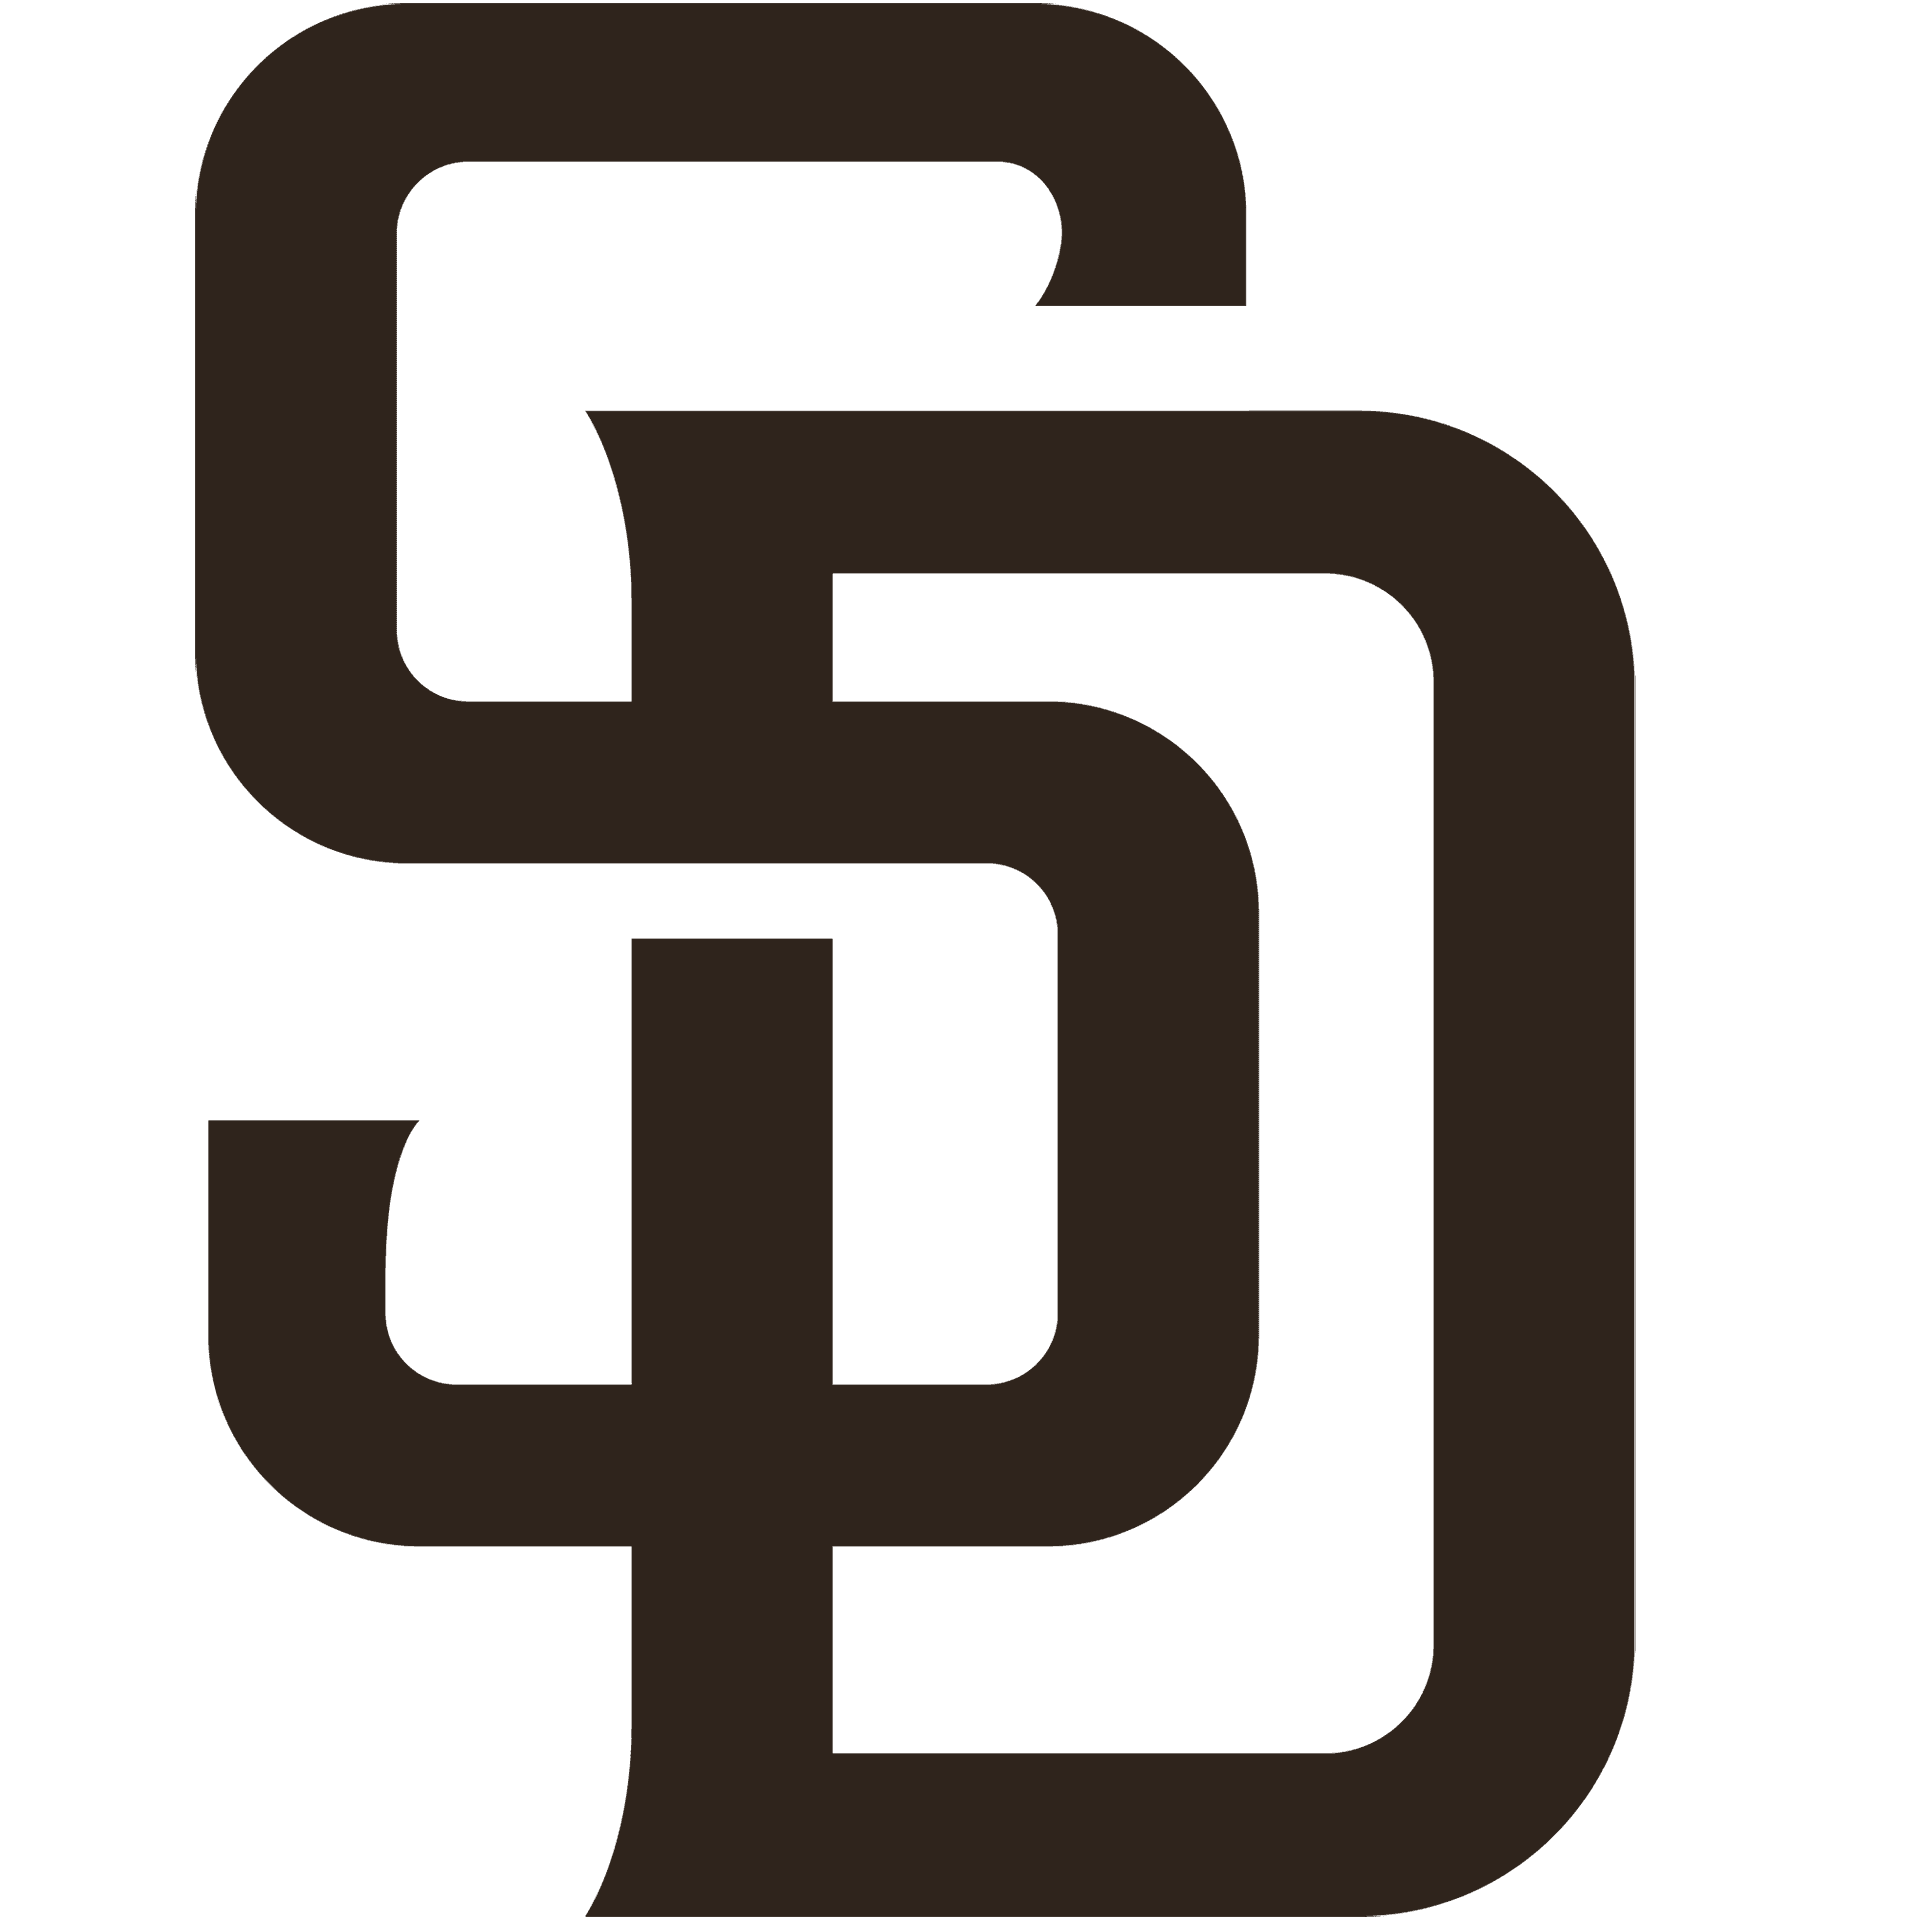 San Diego Padres Logo 3d model